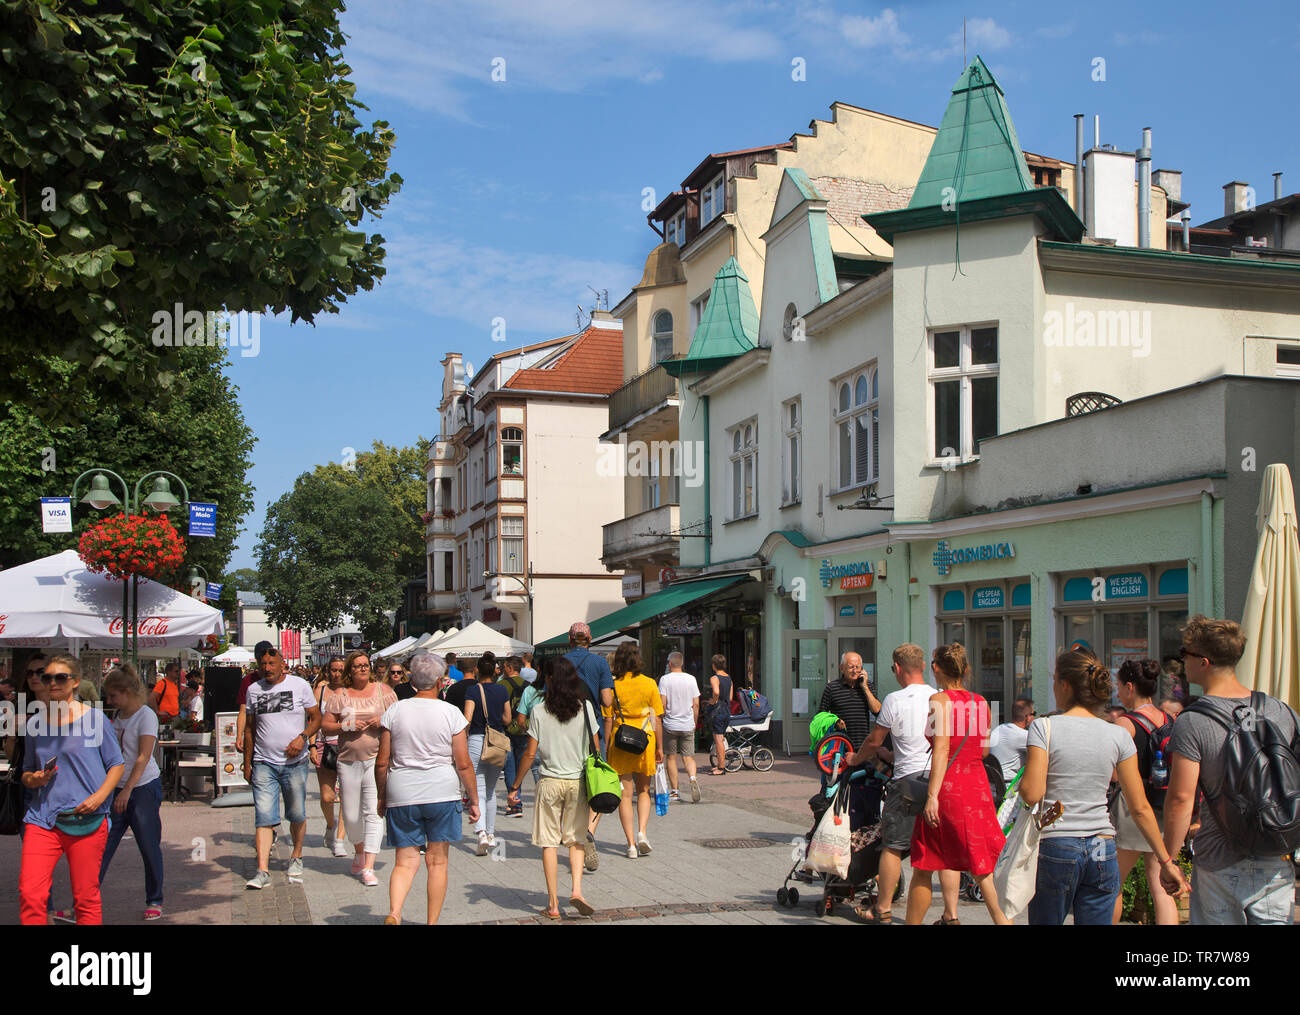 Bohaterow Monte Cassino street in Sopot. Poland Stock Photo